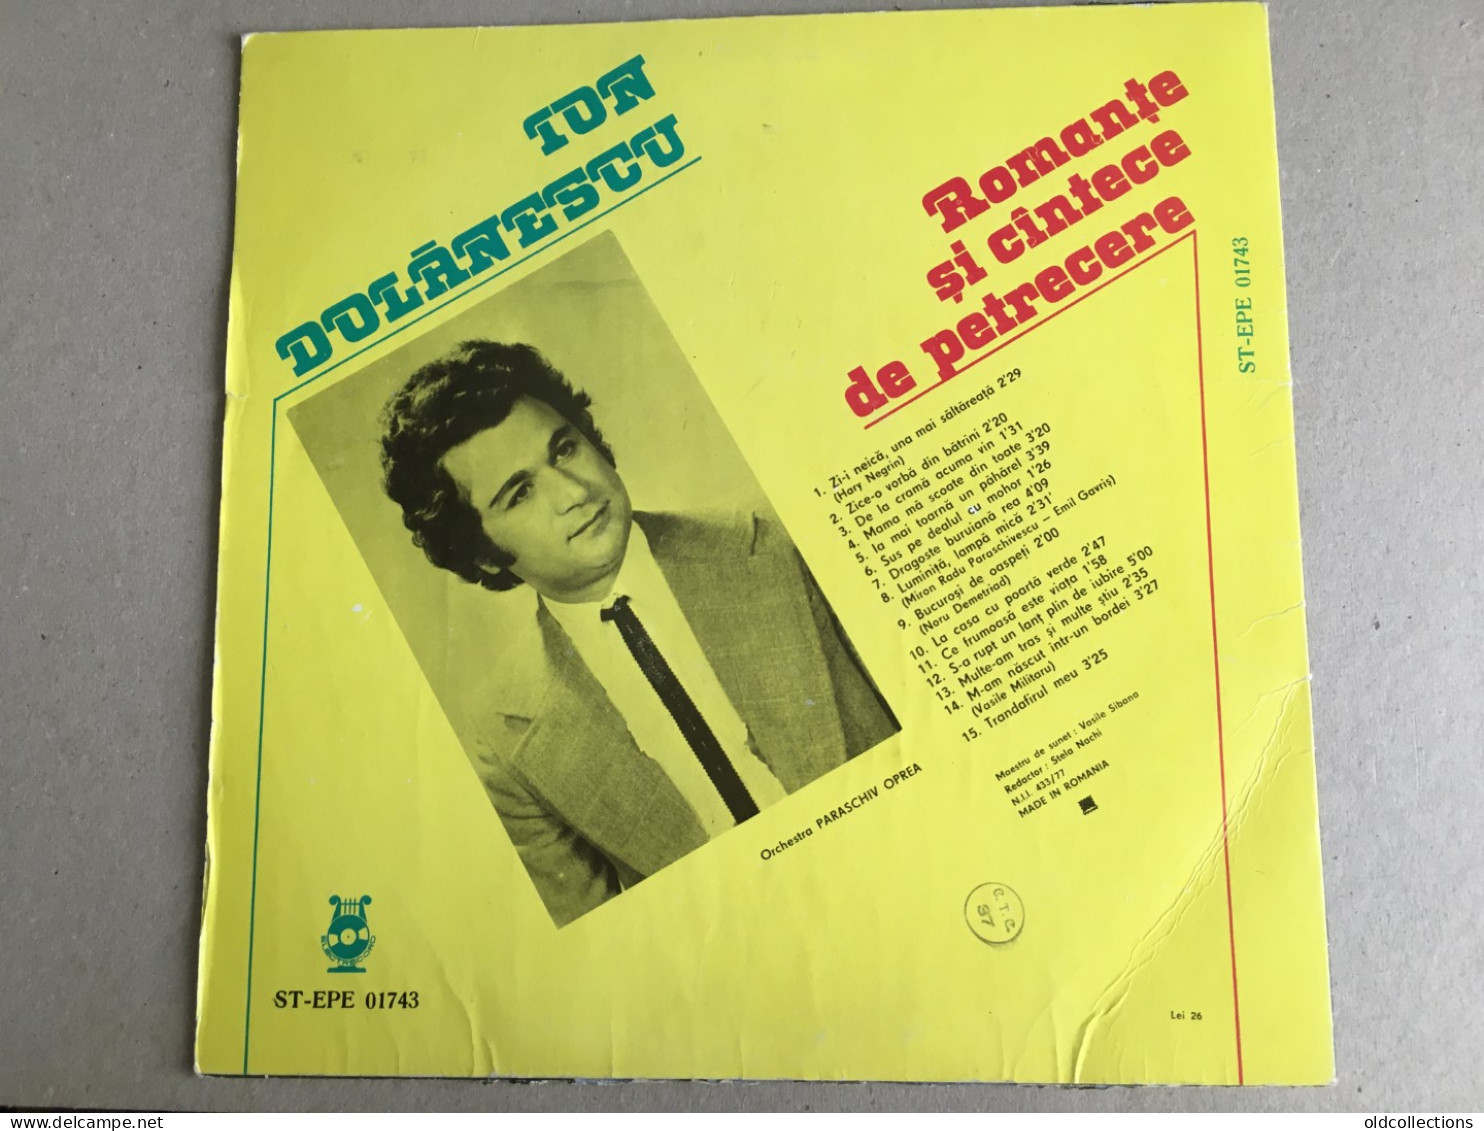 Schallplatte Vinyl Record Disque Vinyle LP Record - Romania Ion Dolanescu Folk Music - World Music